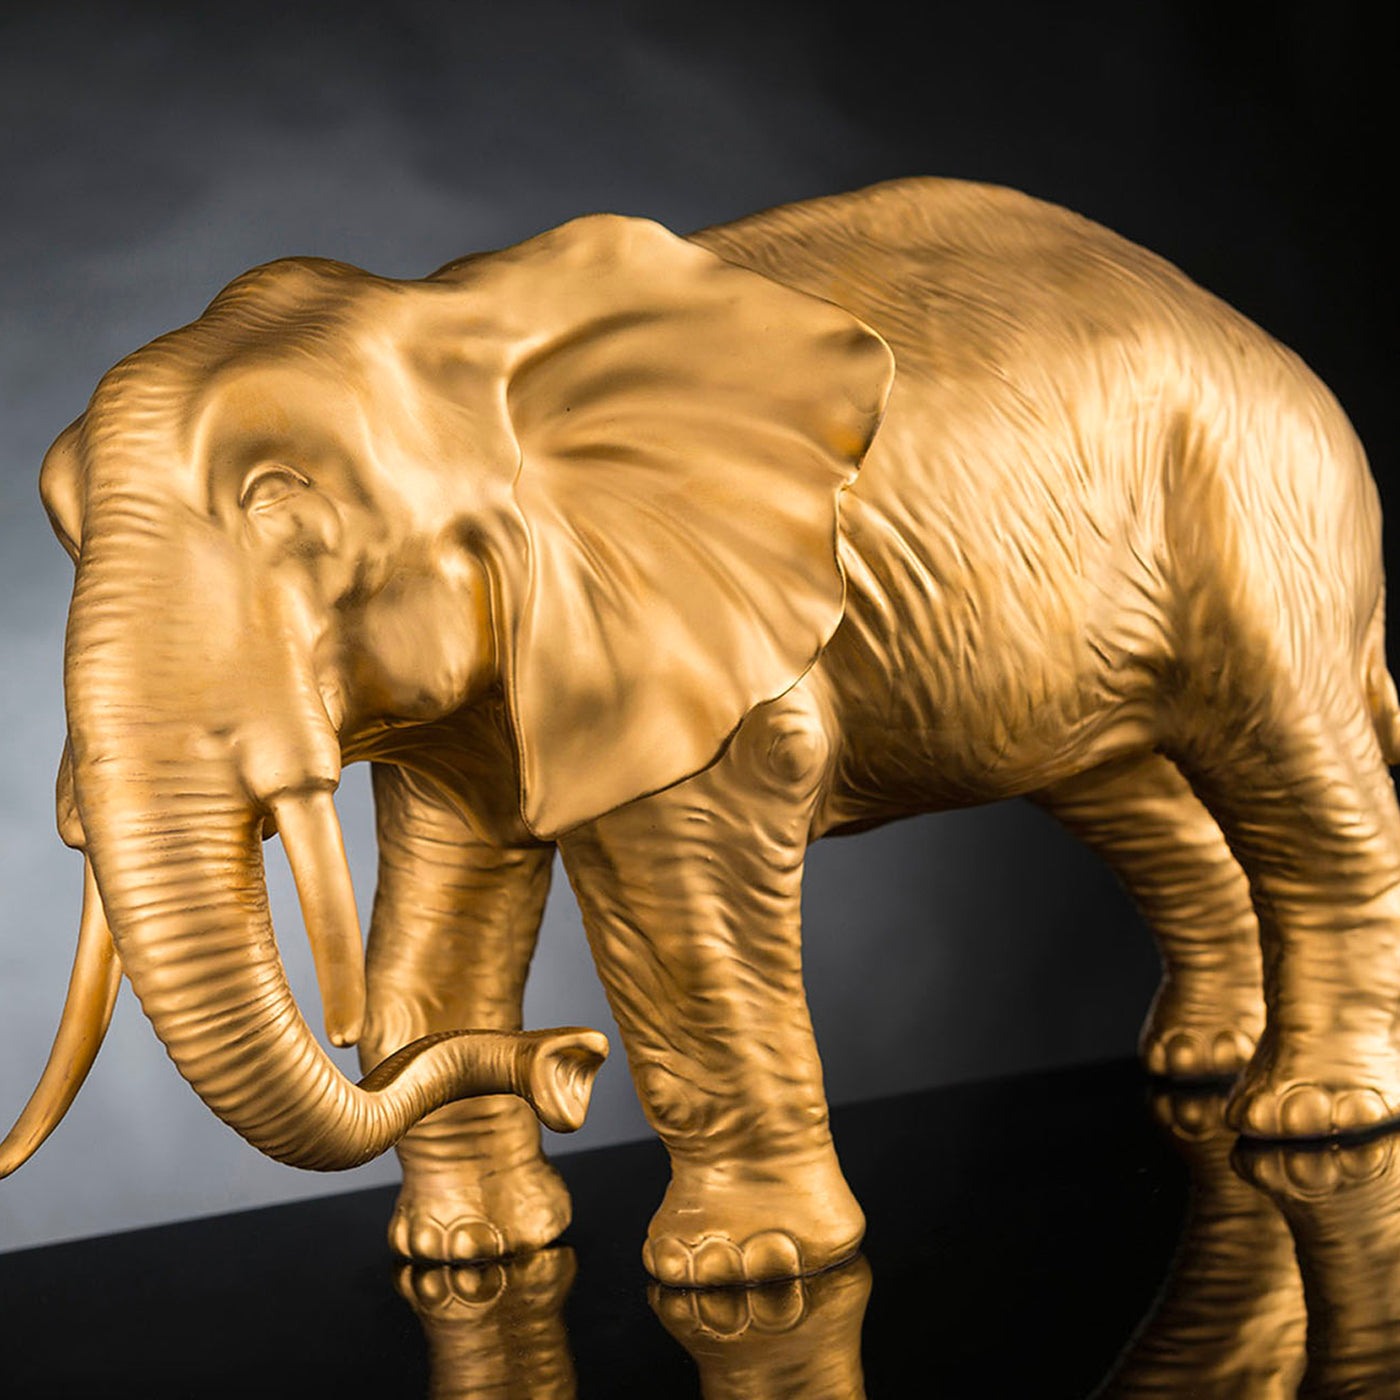 African Father Elephant-Shaped Golden Sculpture - Alternative view 2